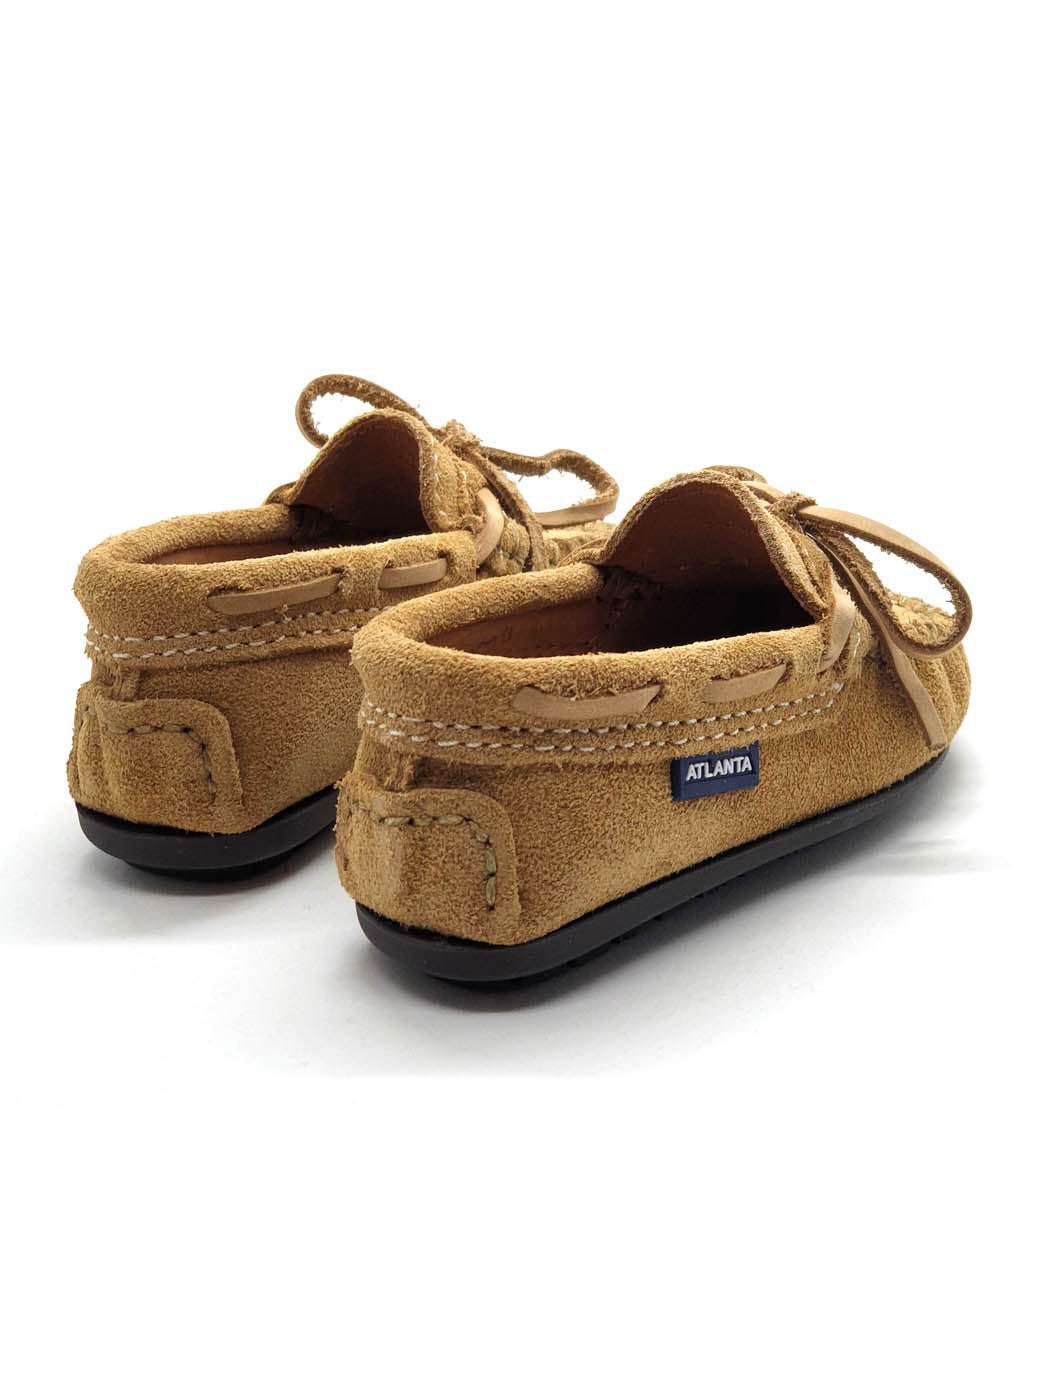 Atlanta Mocassin-Baby Shoes Moccasins Camel-002G022